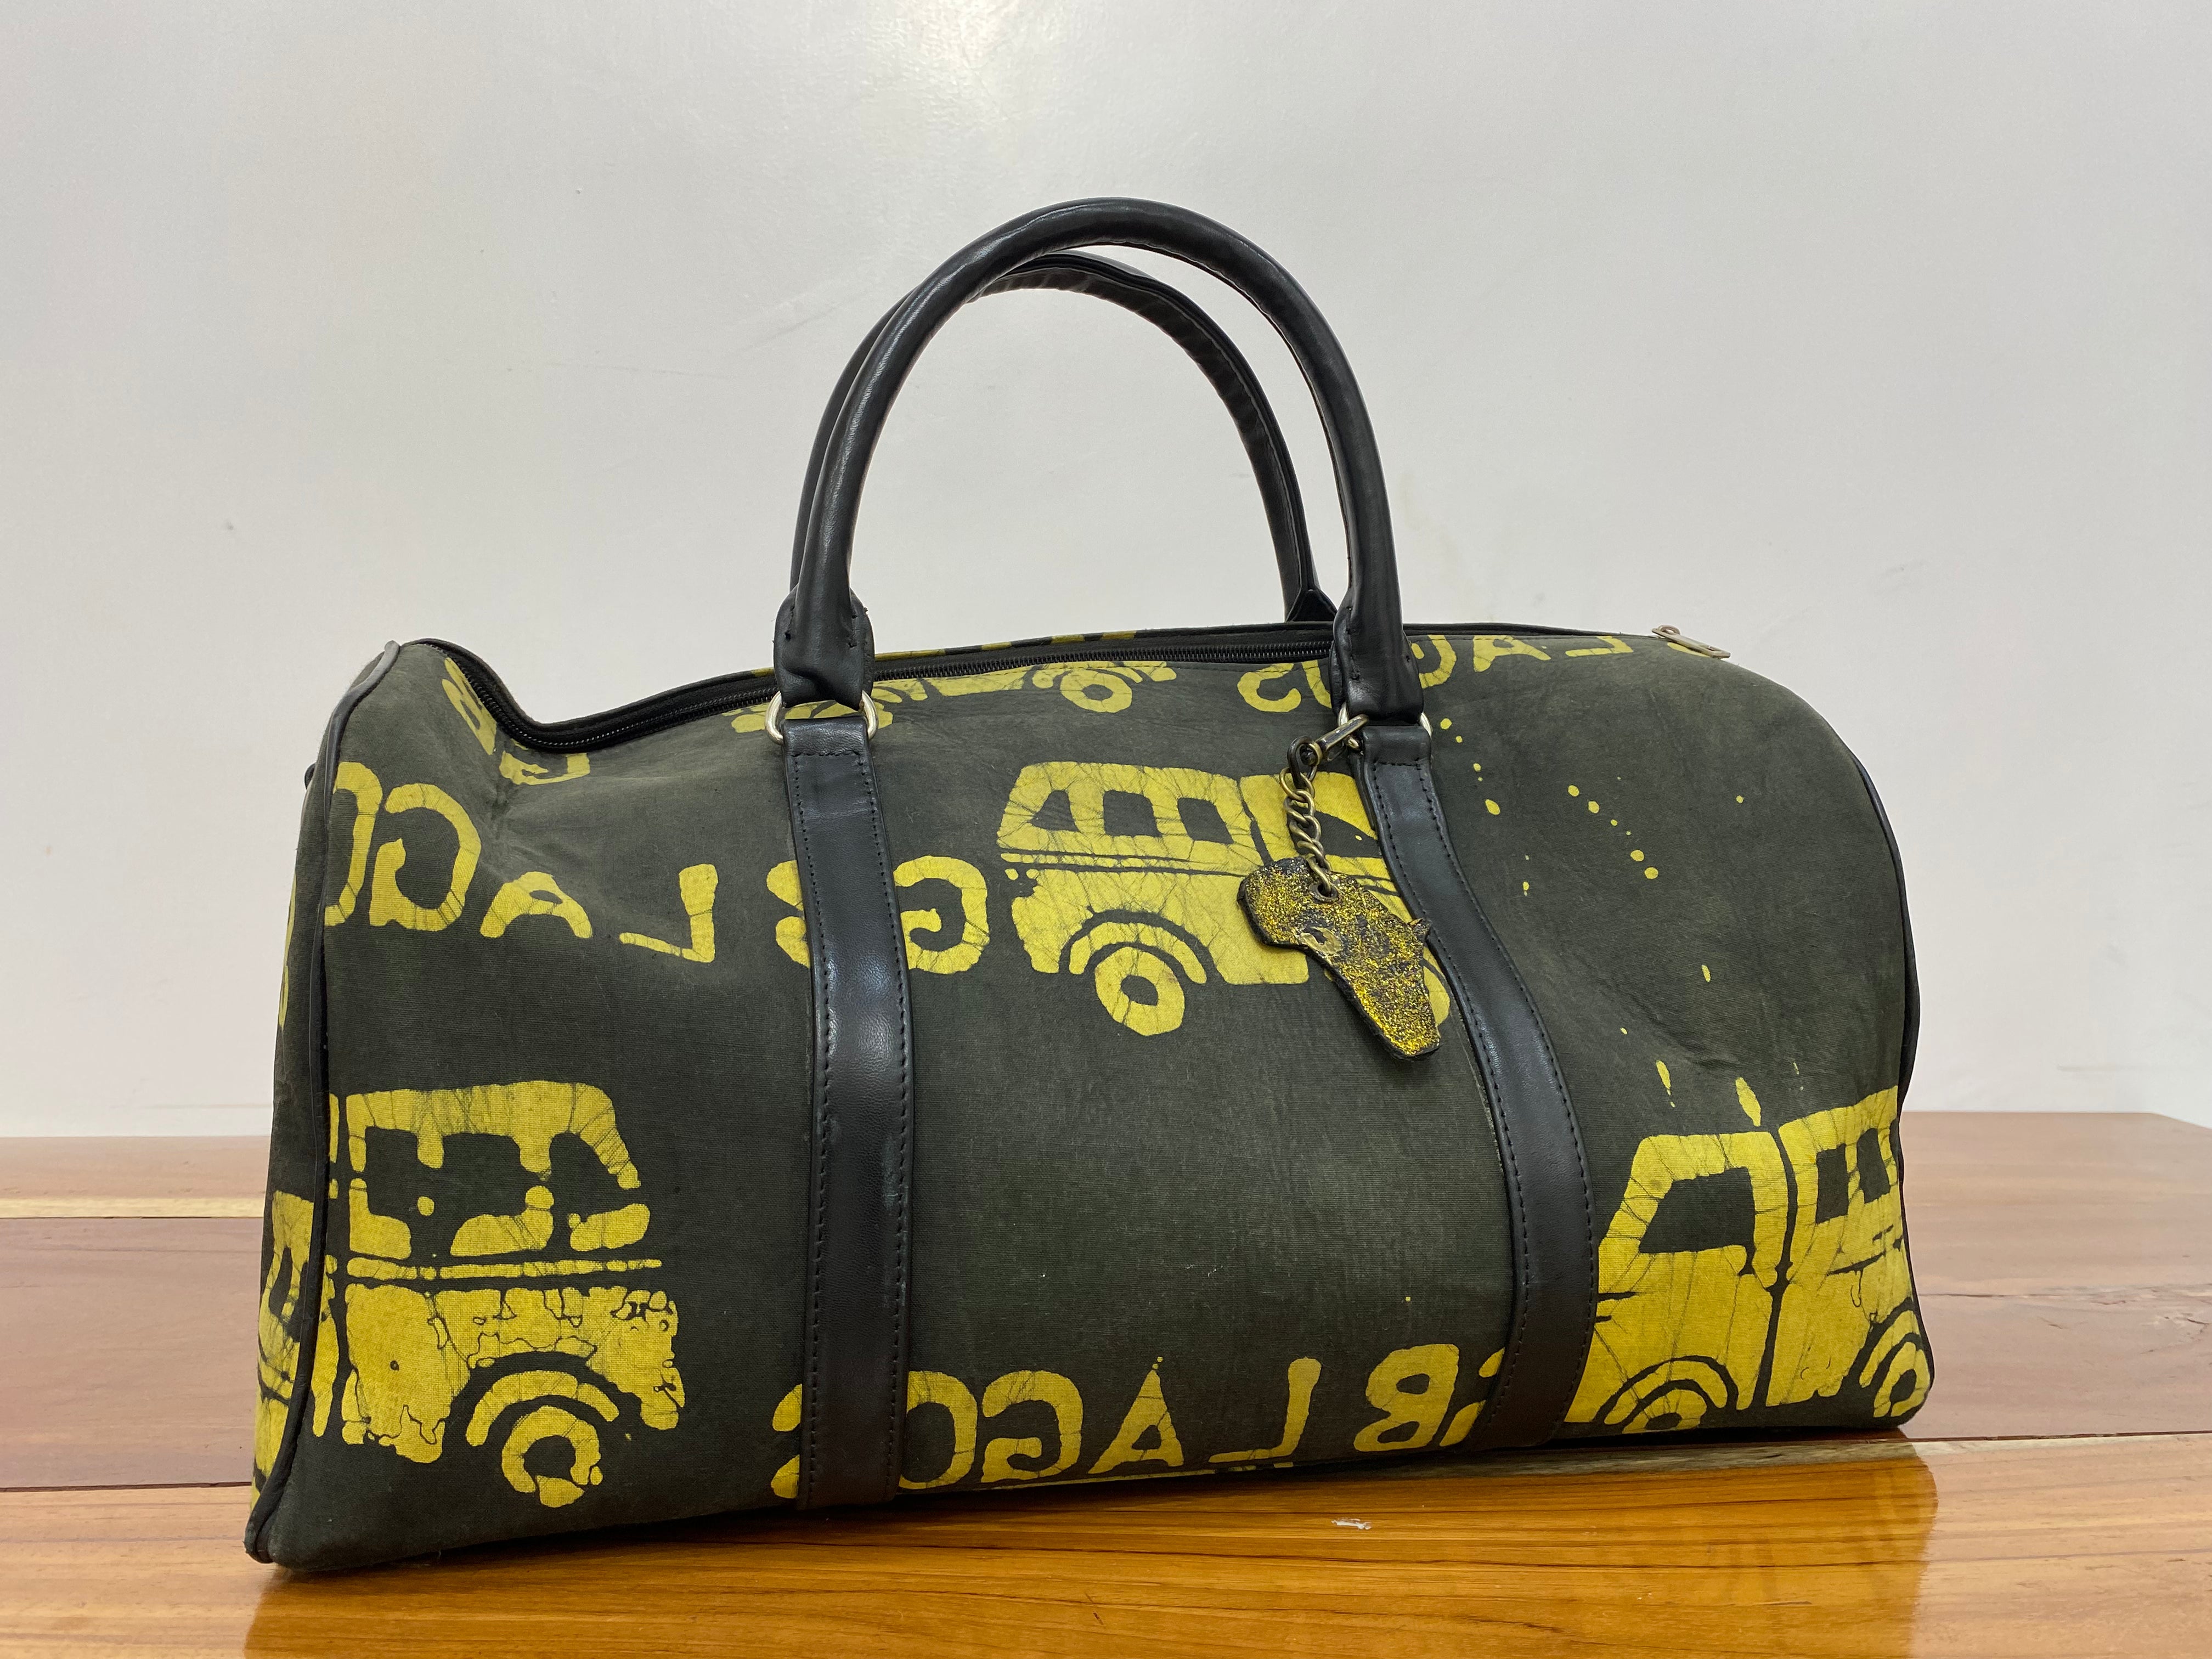 GBL 30 Duffle Bag